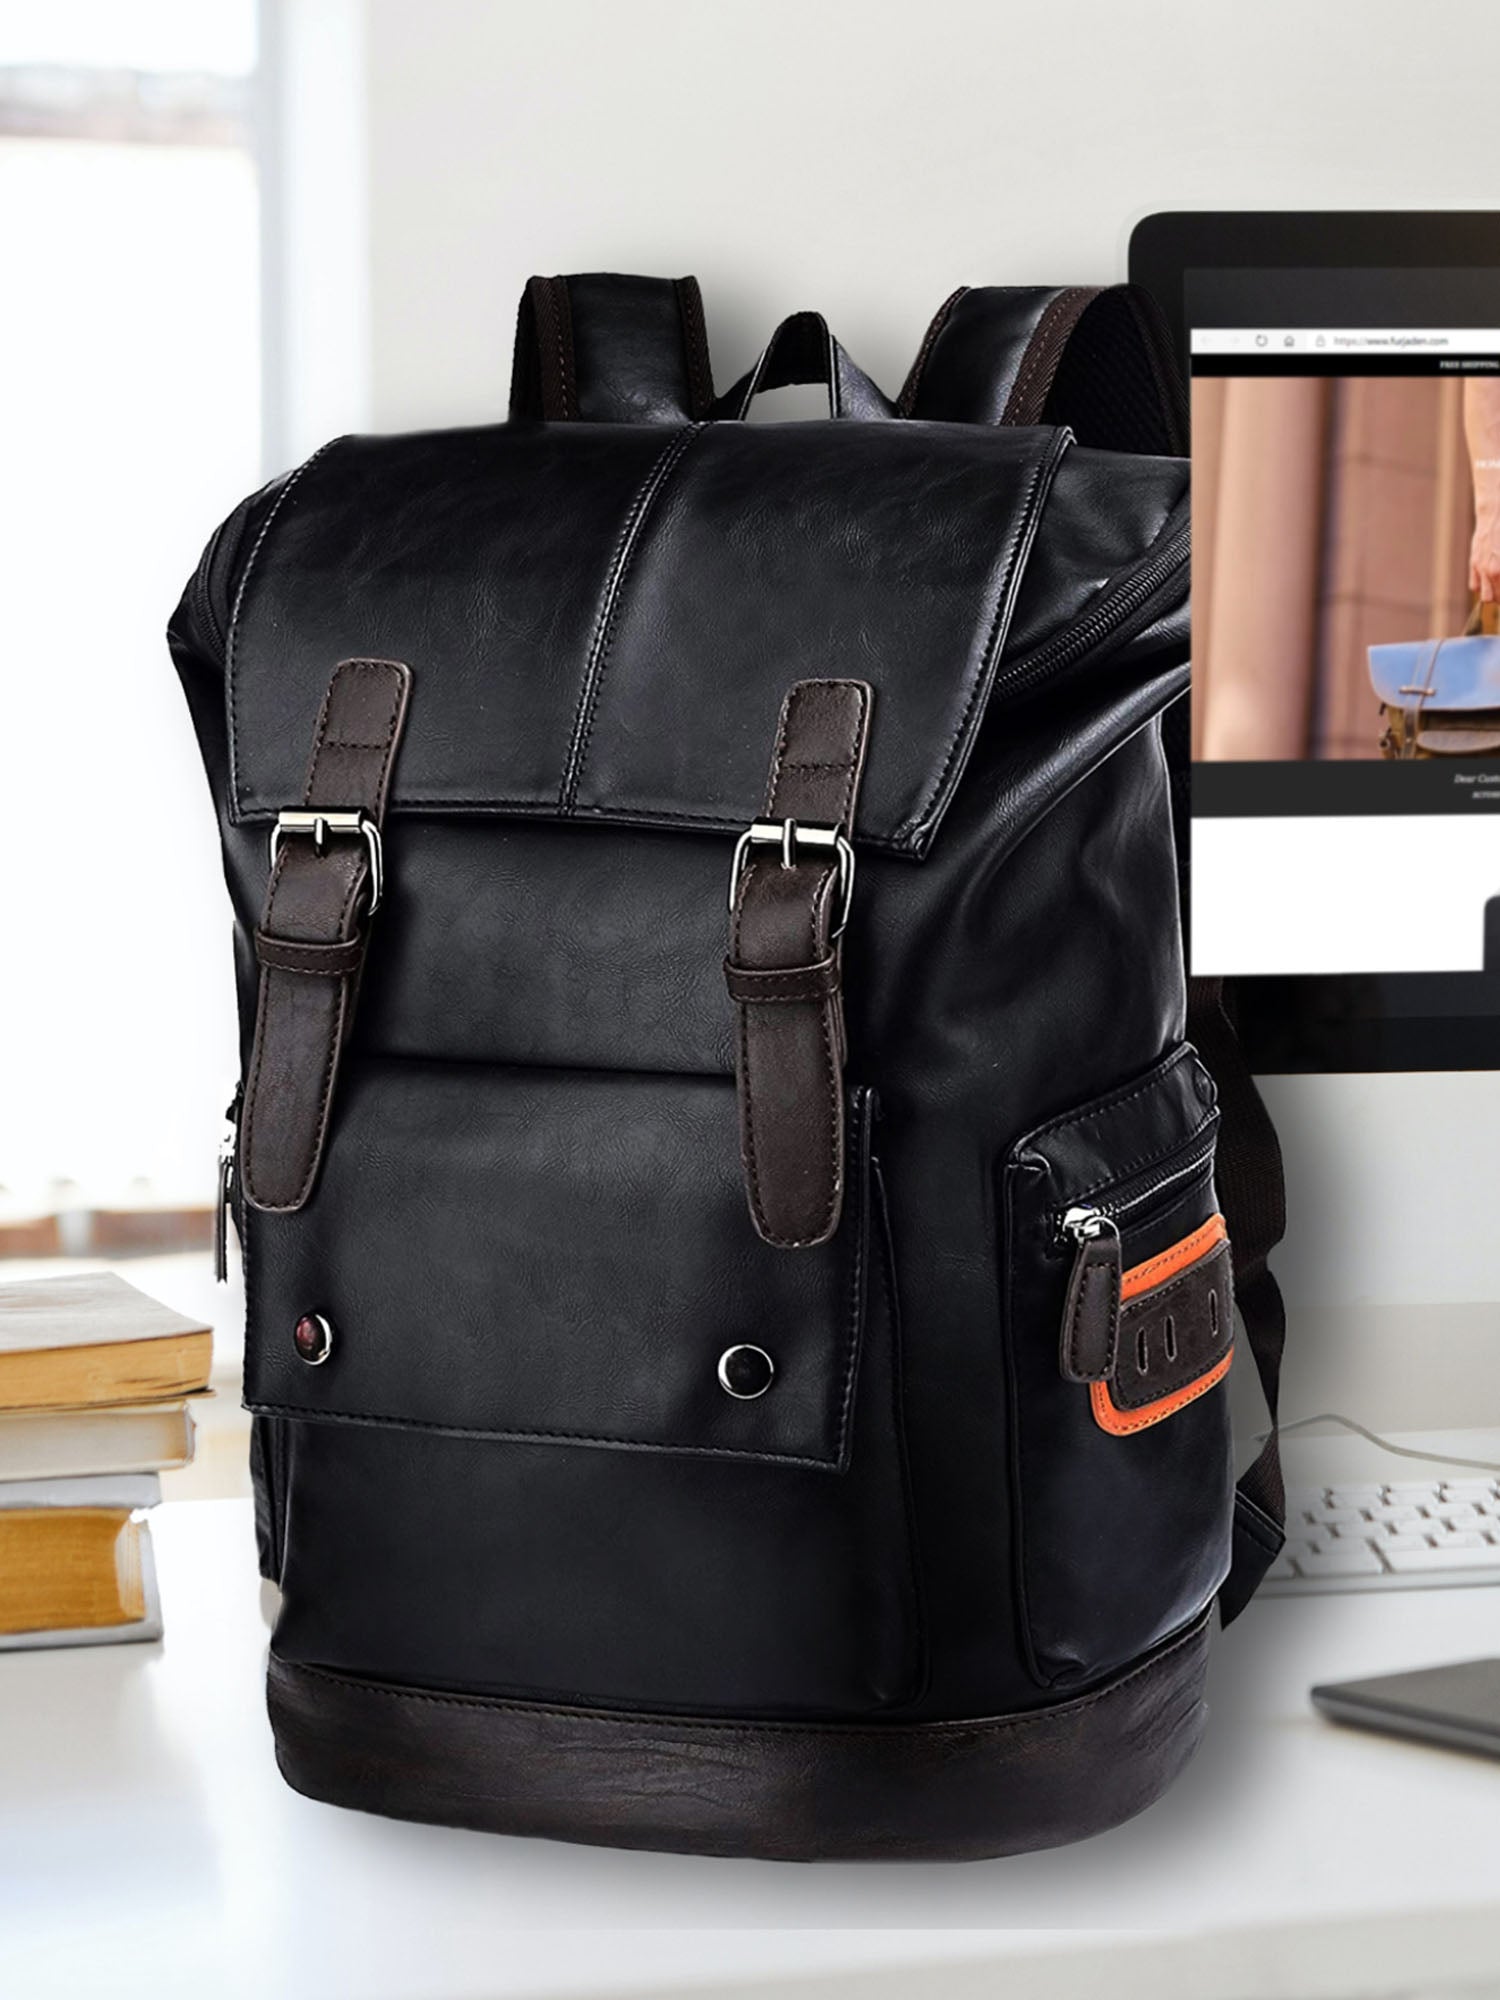 FUR JADEN Anti Theft Backpack 156 Inch Laptop Bag with USB Charging Port  For Men Women Boys Girls  Amazonin Fashion